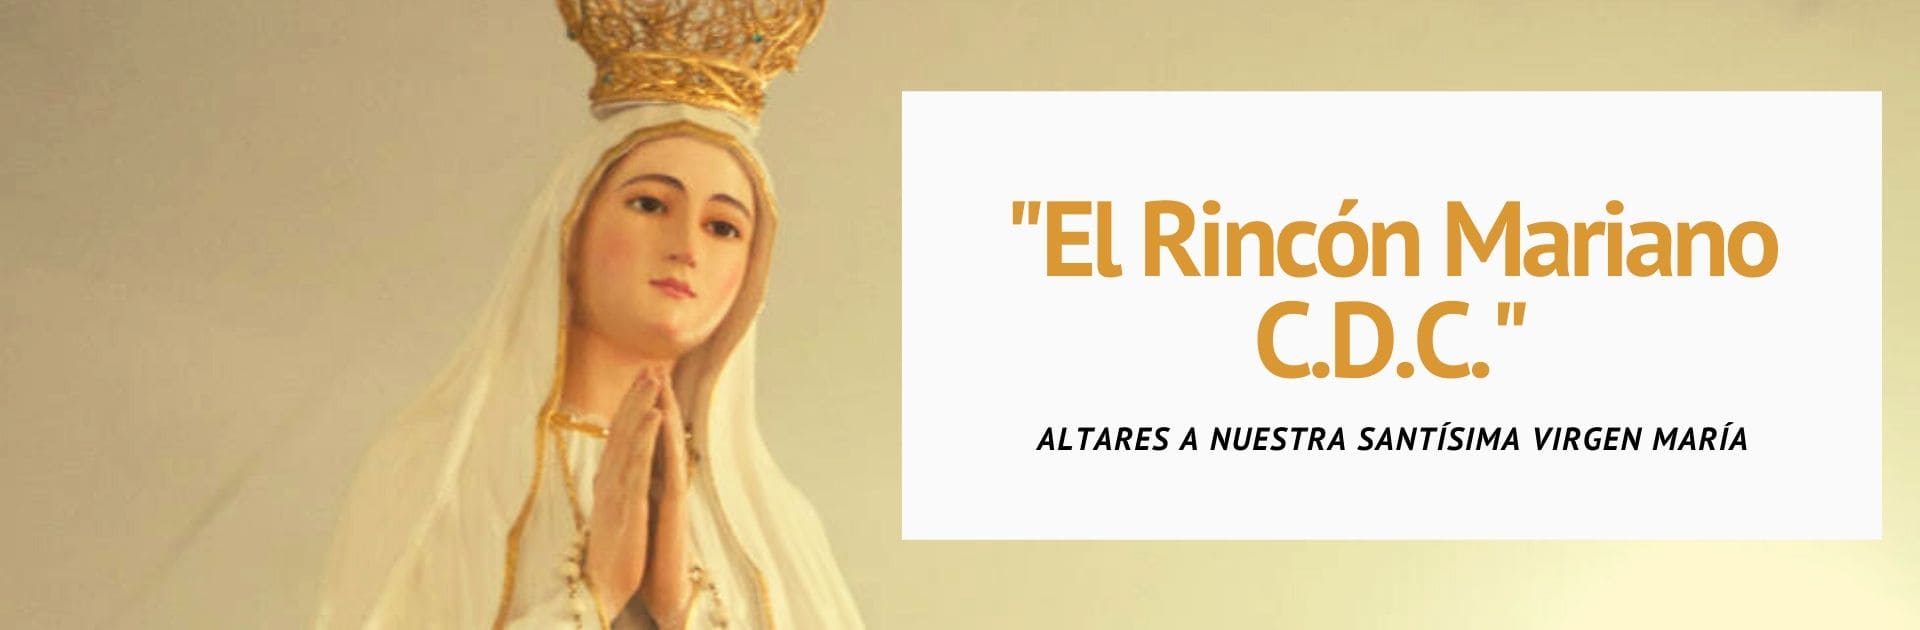 https://arquimedia.s3.amazonaws.com/381/pastoralorientacion/el-rincon-mariano-cdc-1jpg.jpg